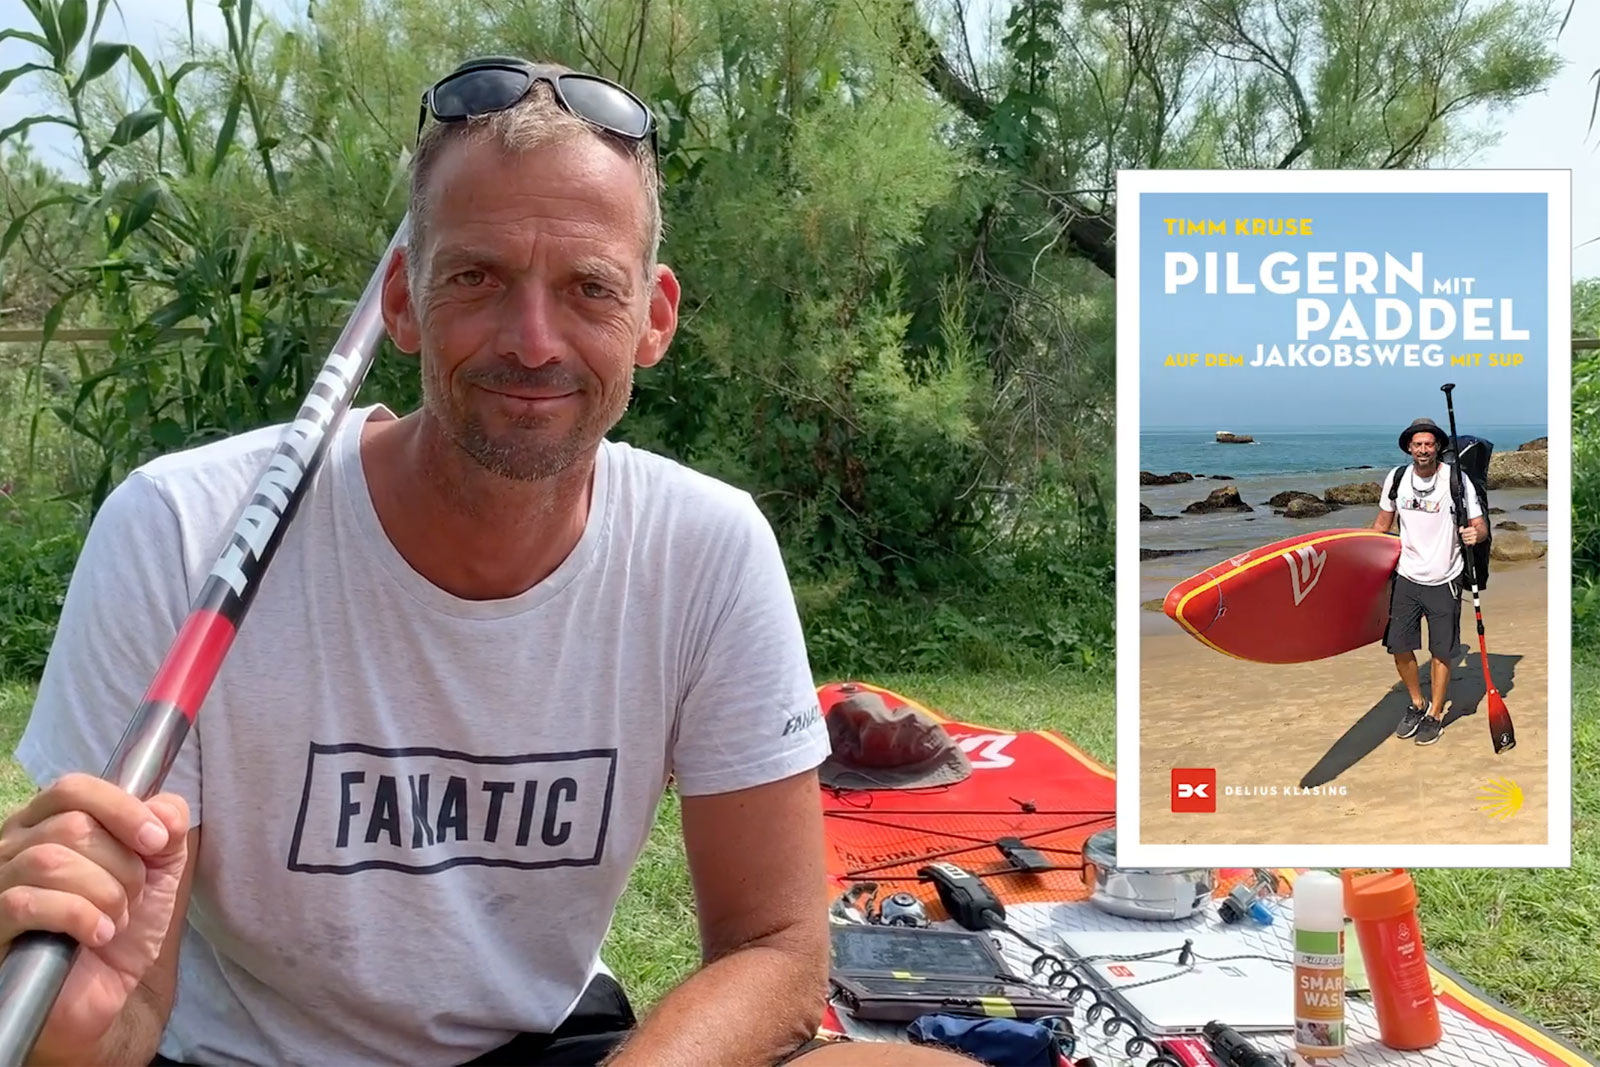 Pilgrim with Paddle: Auf dem SUP den Jakobsweg entland